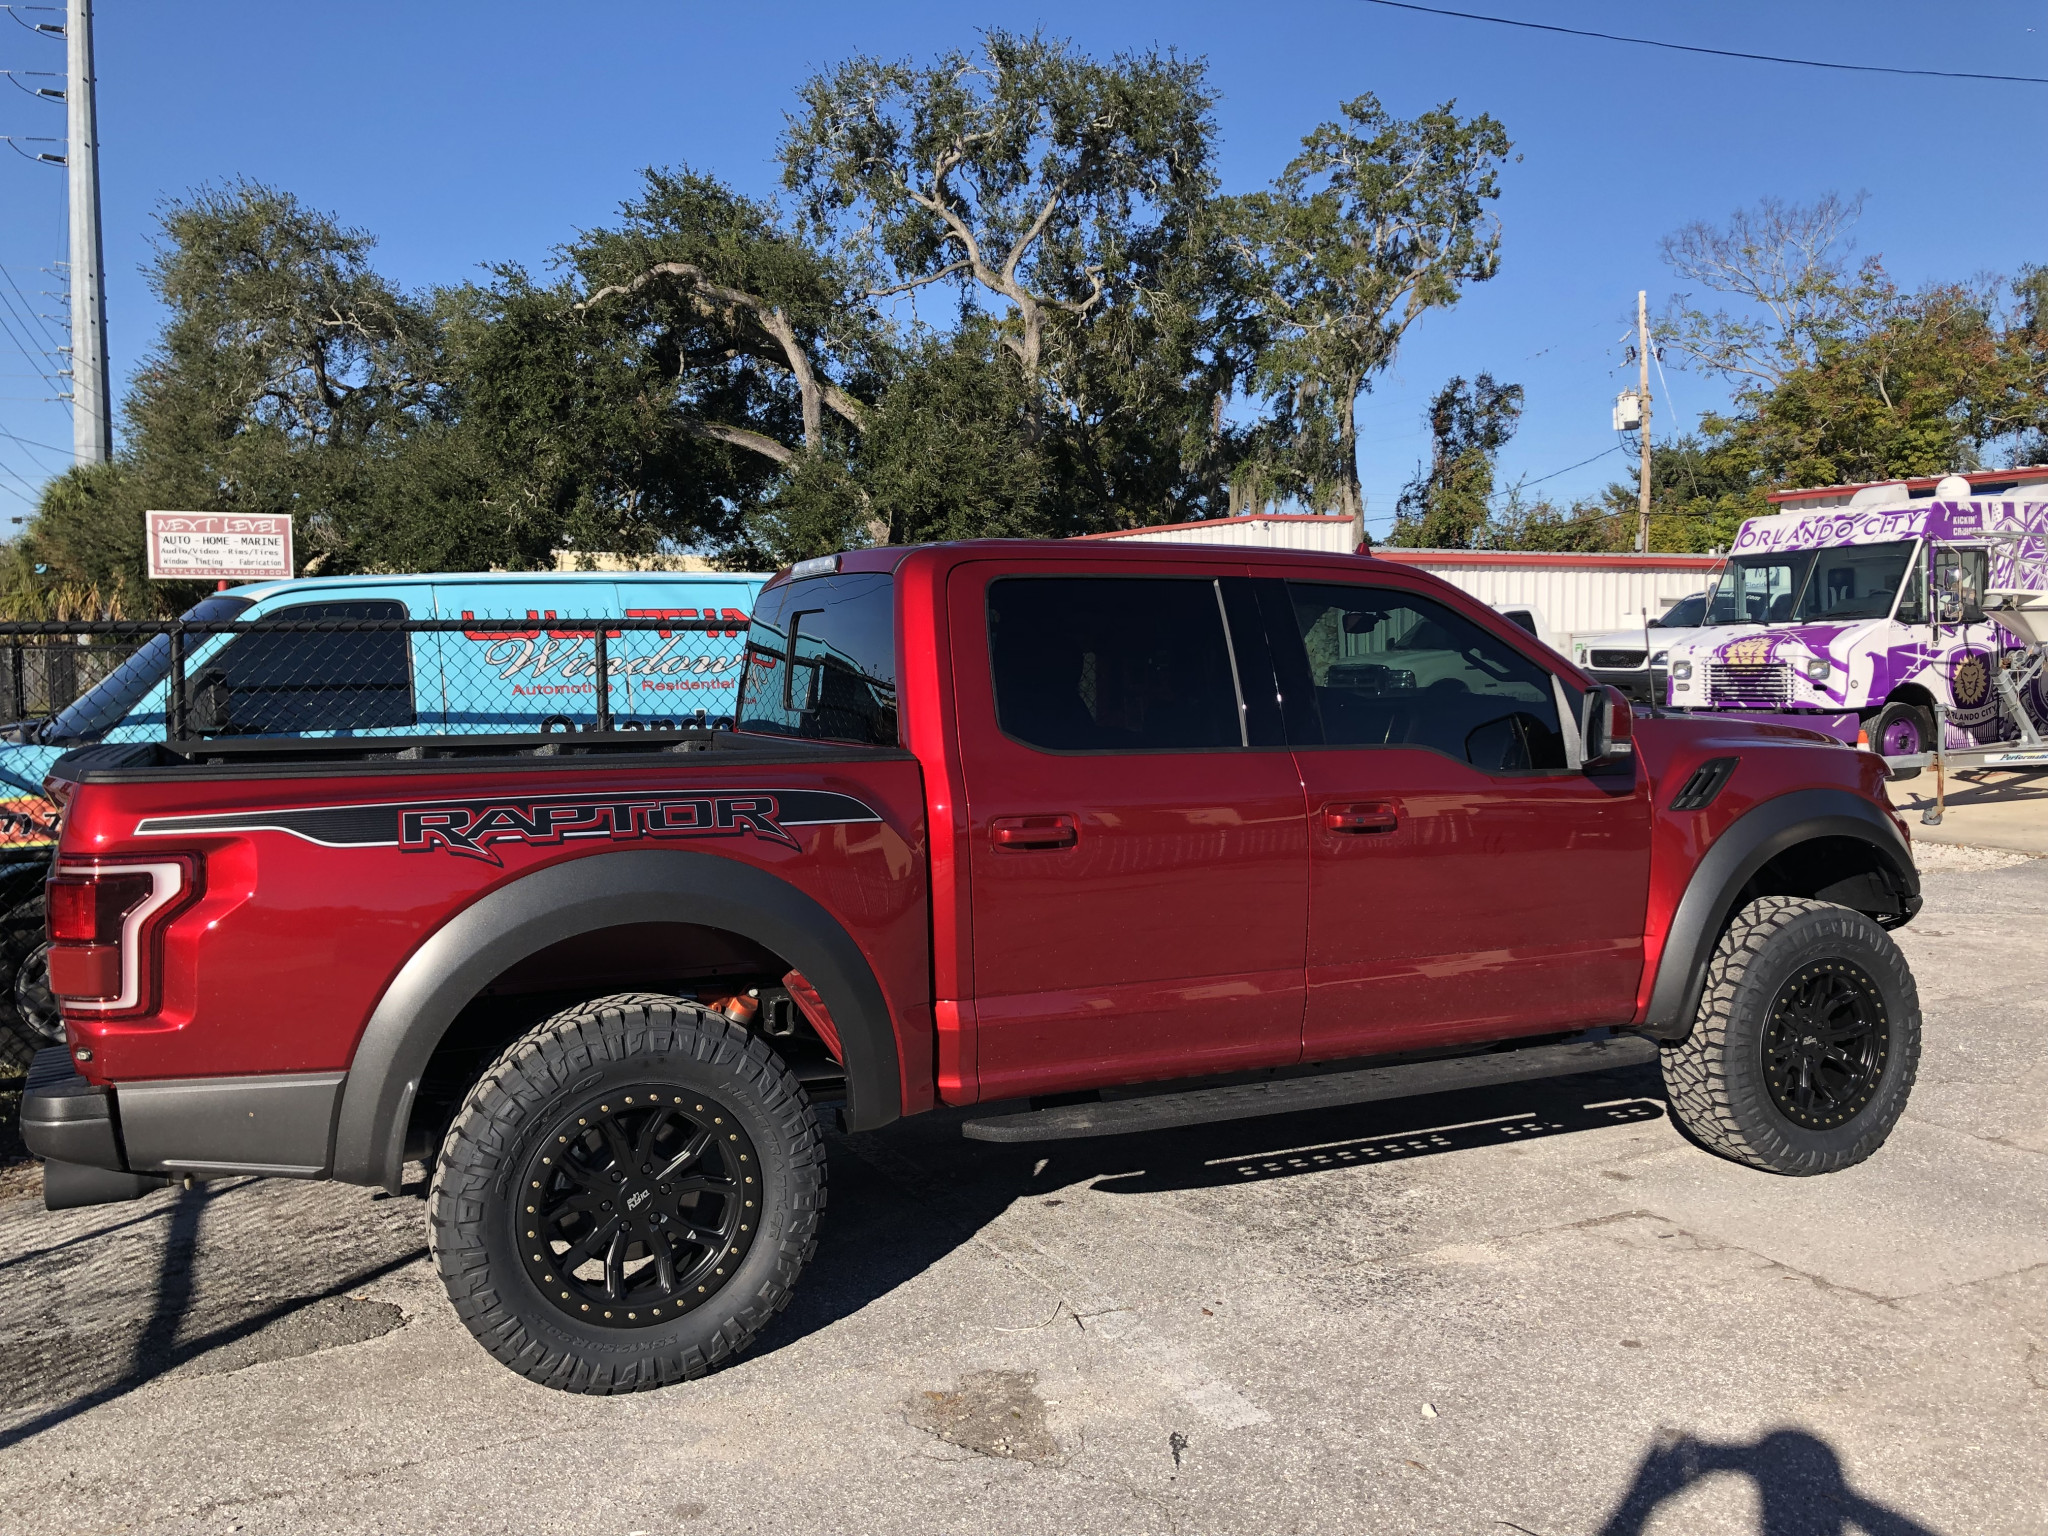 Best Window Tint Ford Raptor in Orlando FL - Ultimate Window Tinting